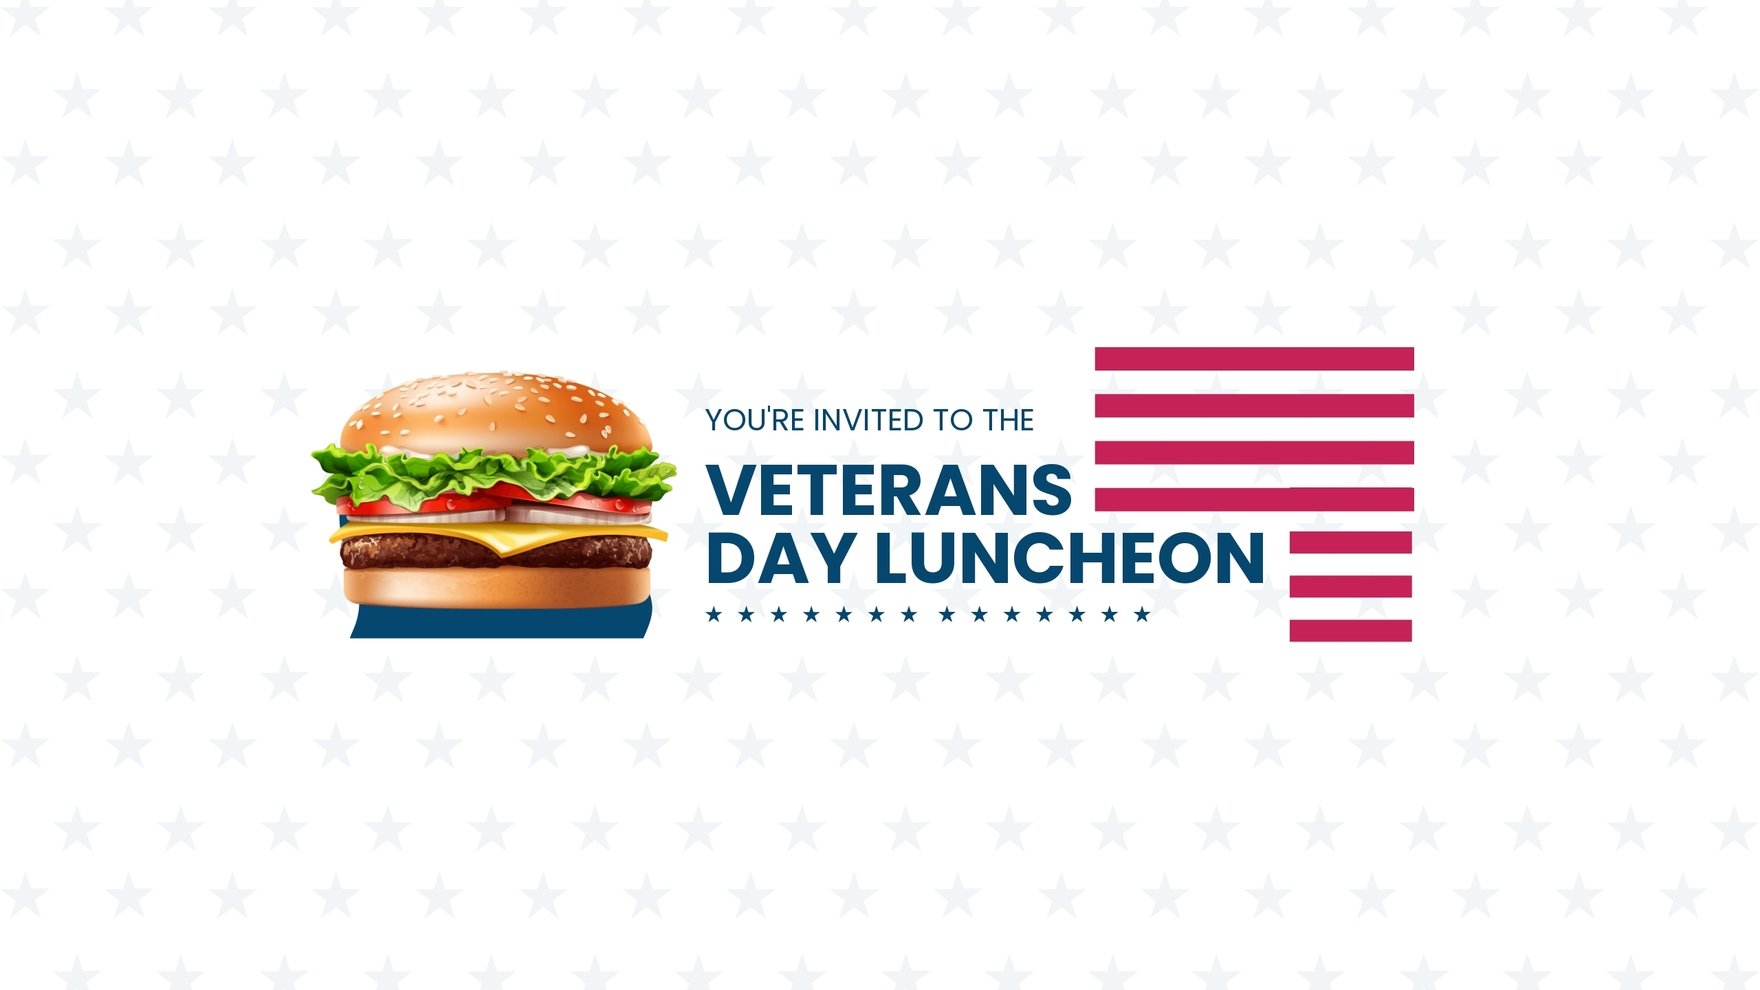 Veterans Day Luncheon Youtube Banner